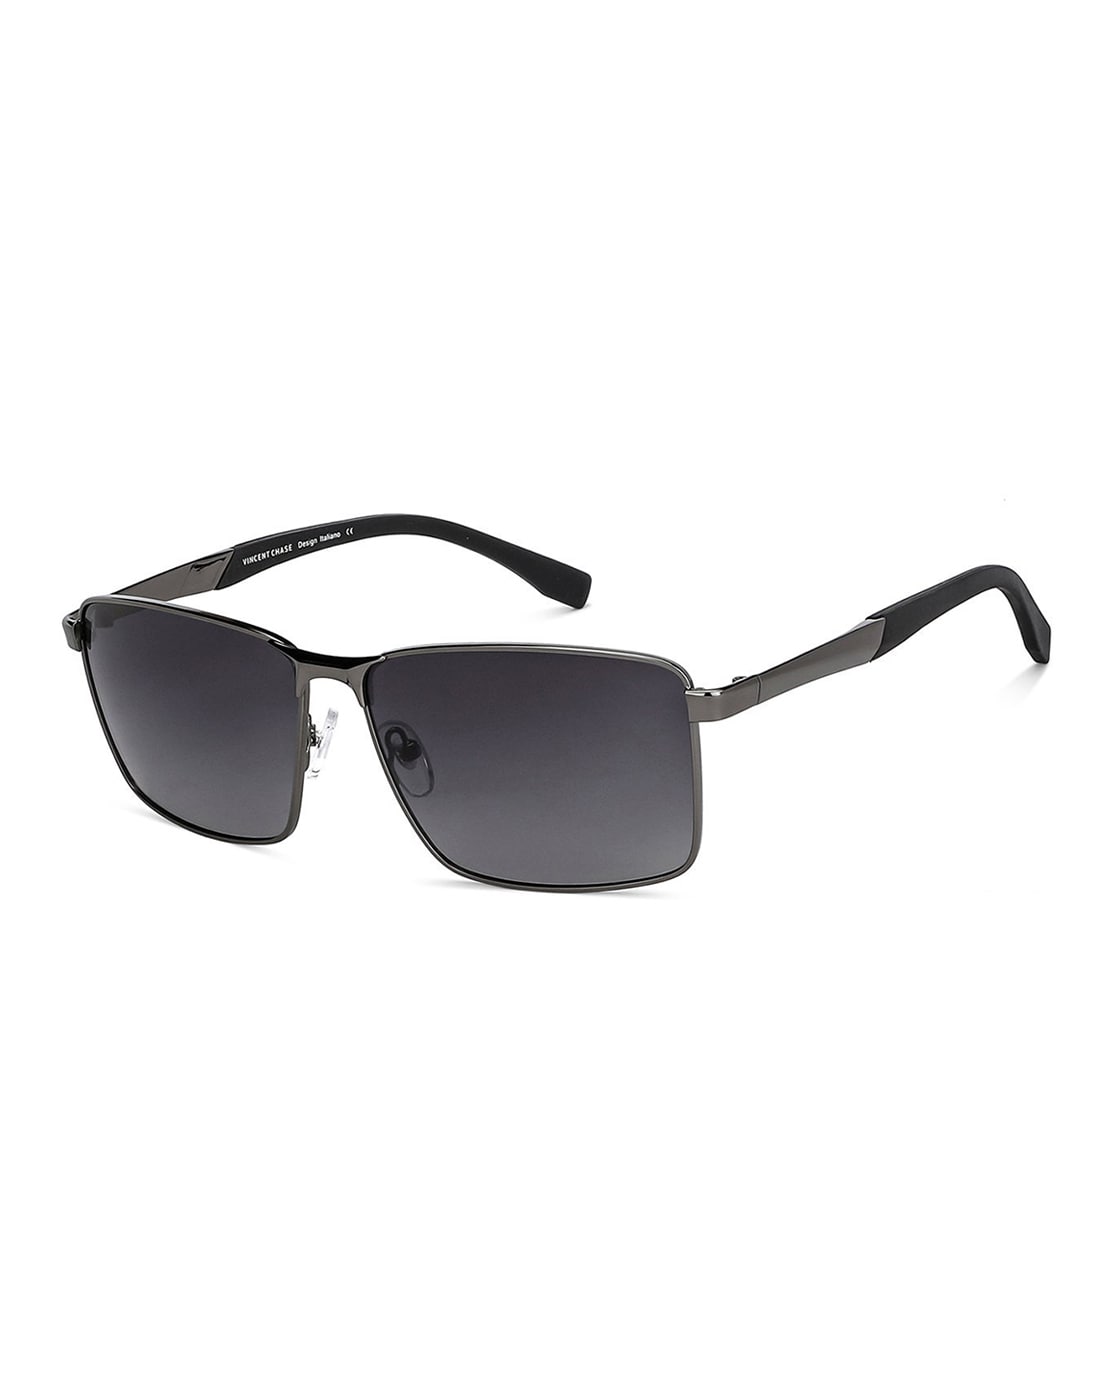 Vincent Chase By Lenskart | Gunmetal Grey Full Rim Rectangular |  Aerodynamics | Branded Latest and Stylish Sunglasses | 100% UV Protected |  Men & Wome... - Price History